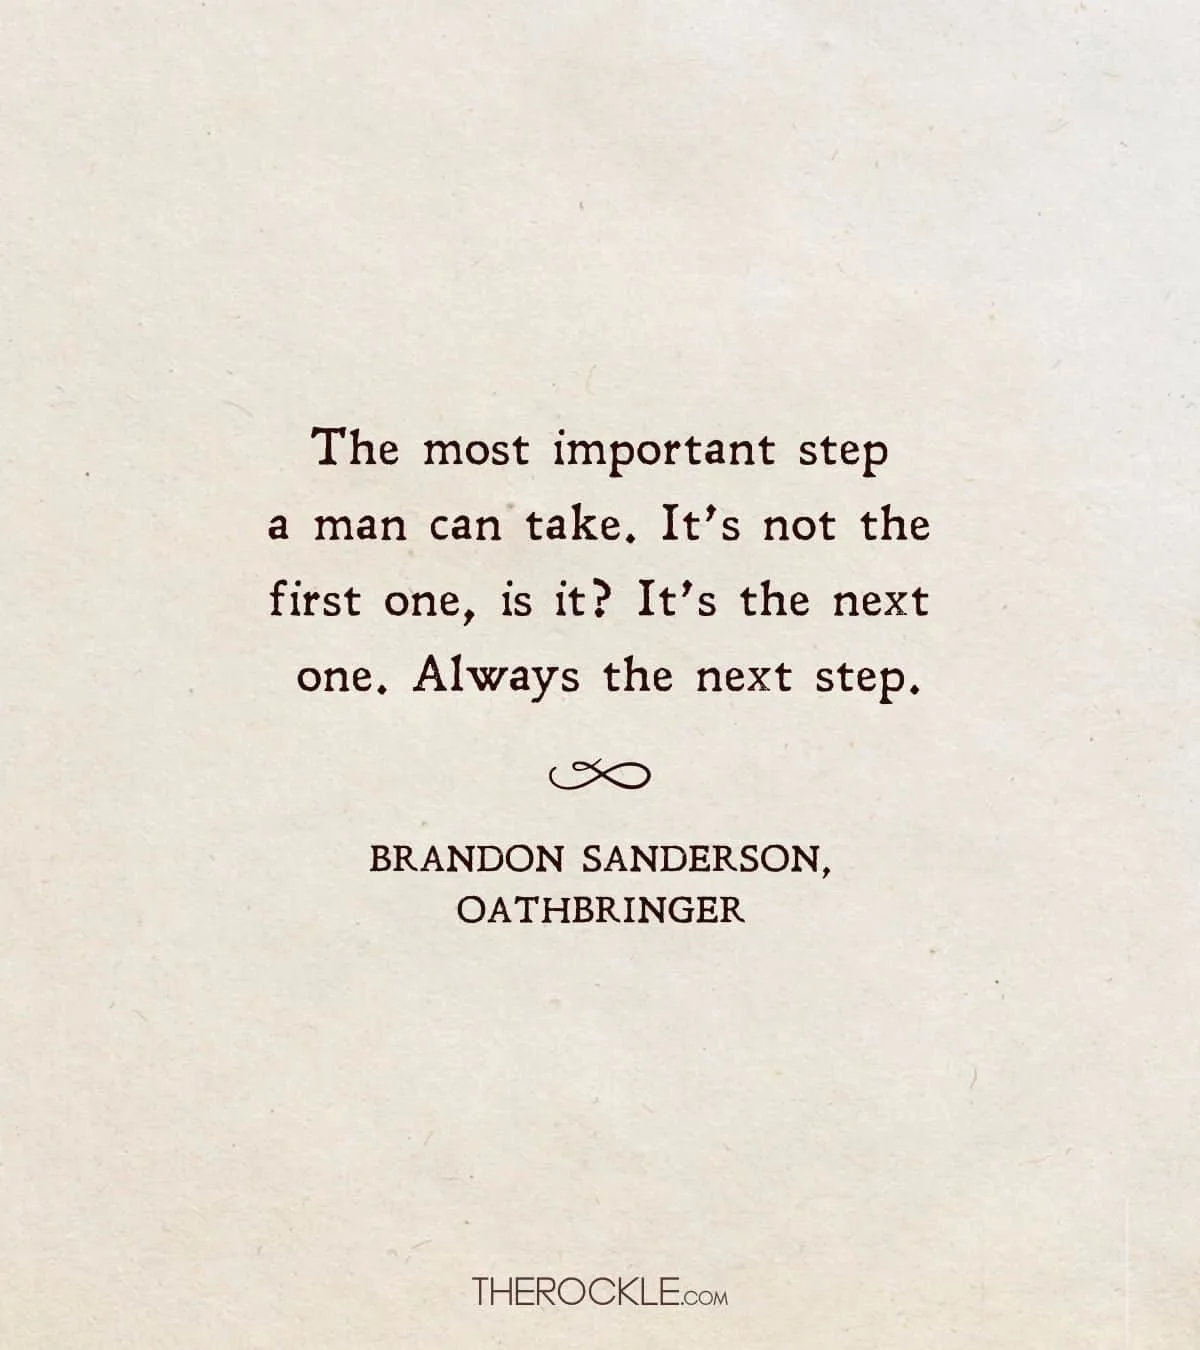 Brandon Sanderson on perseverance